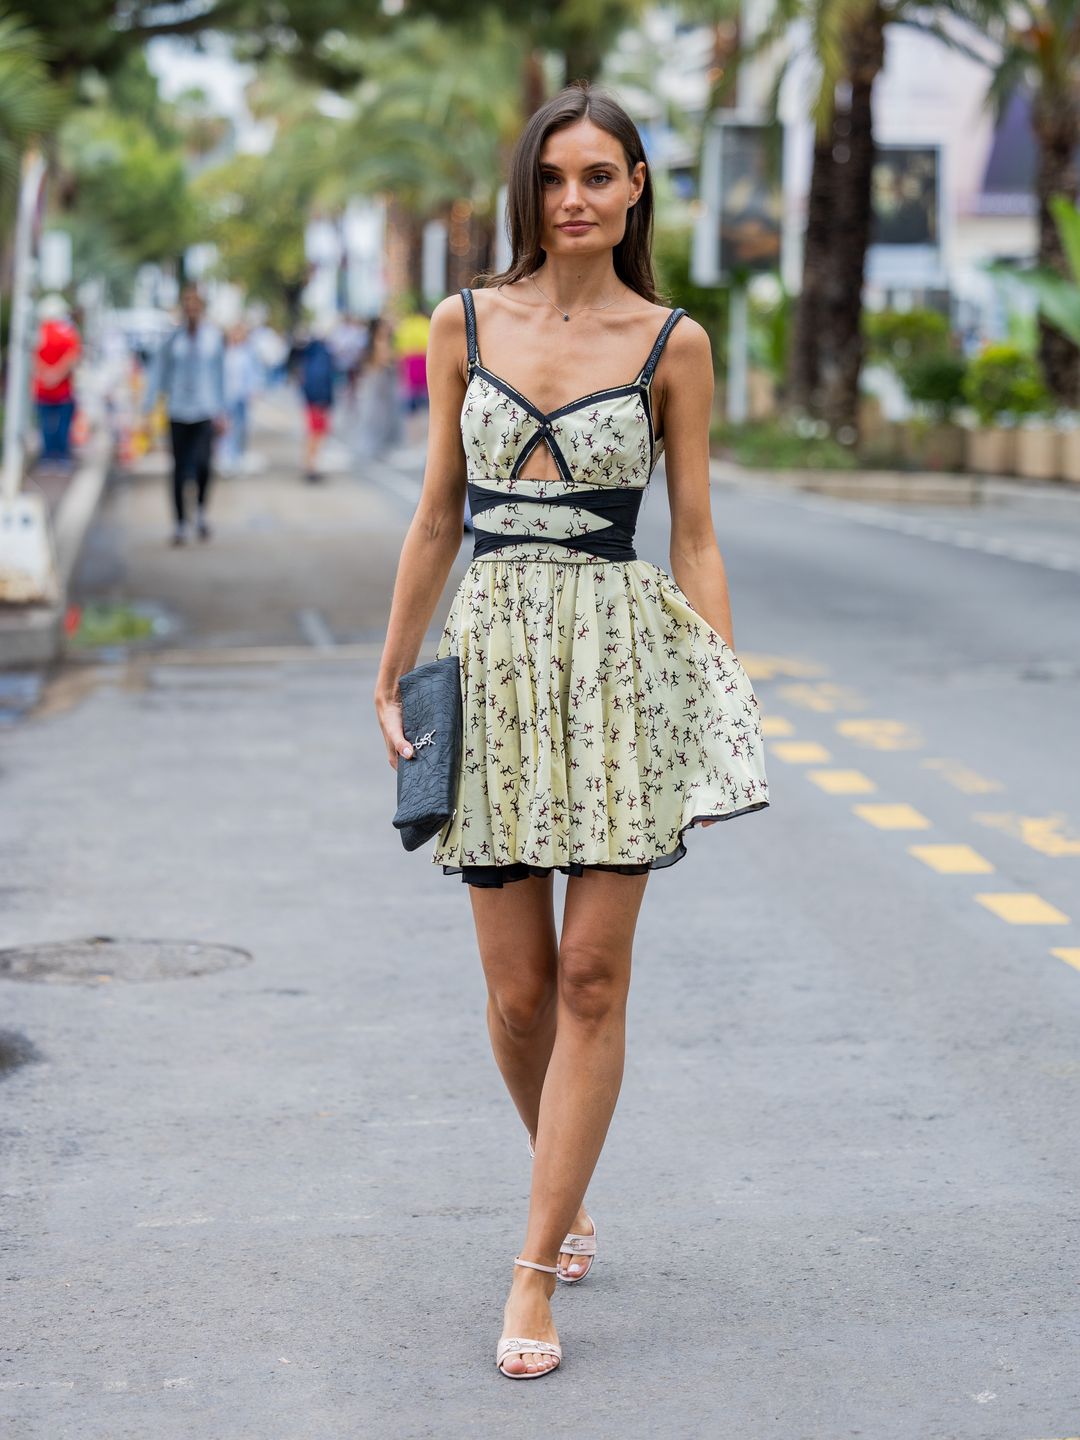 Tina Lezhe looked elegant in a floral mini dress